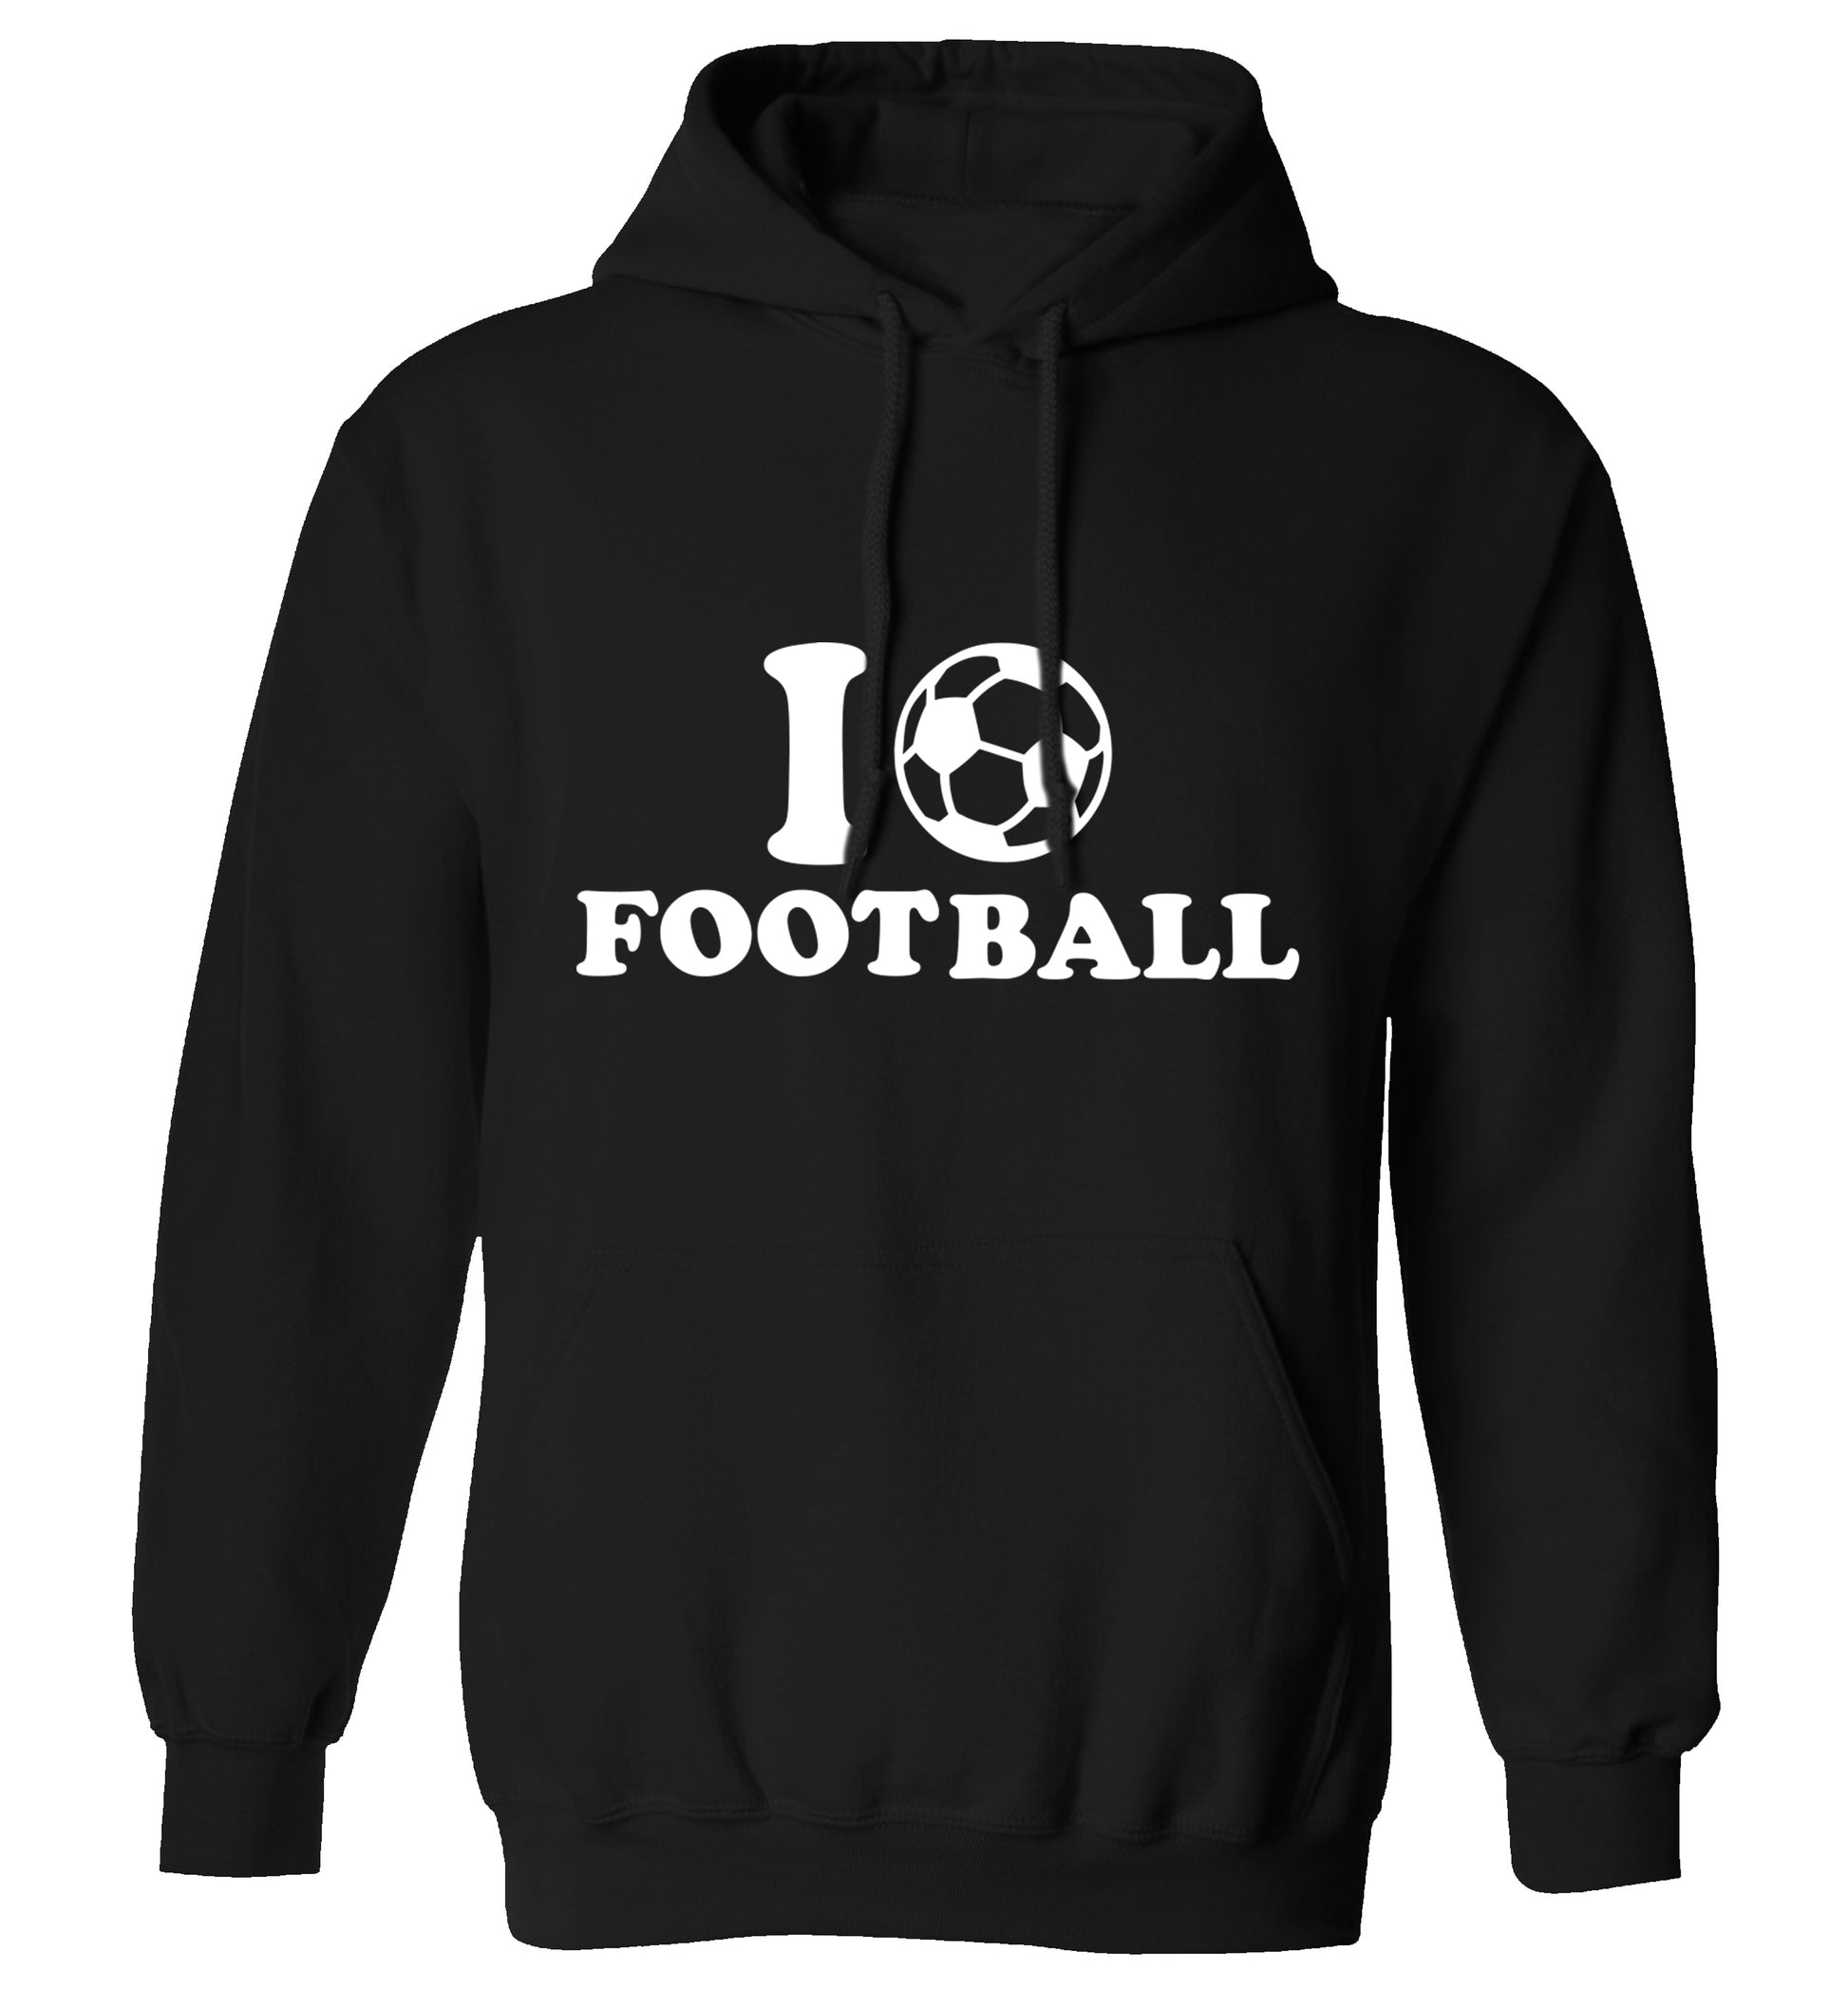 I love football adults unisexblack hoodie 2XL